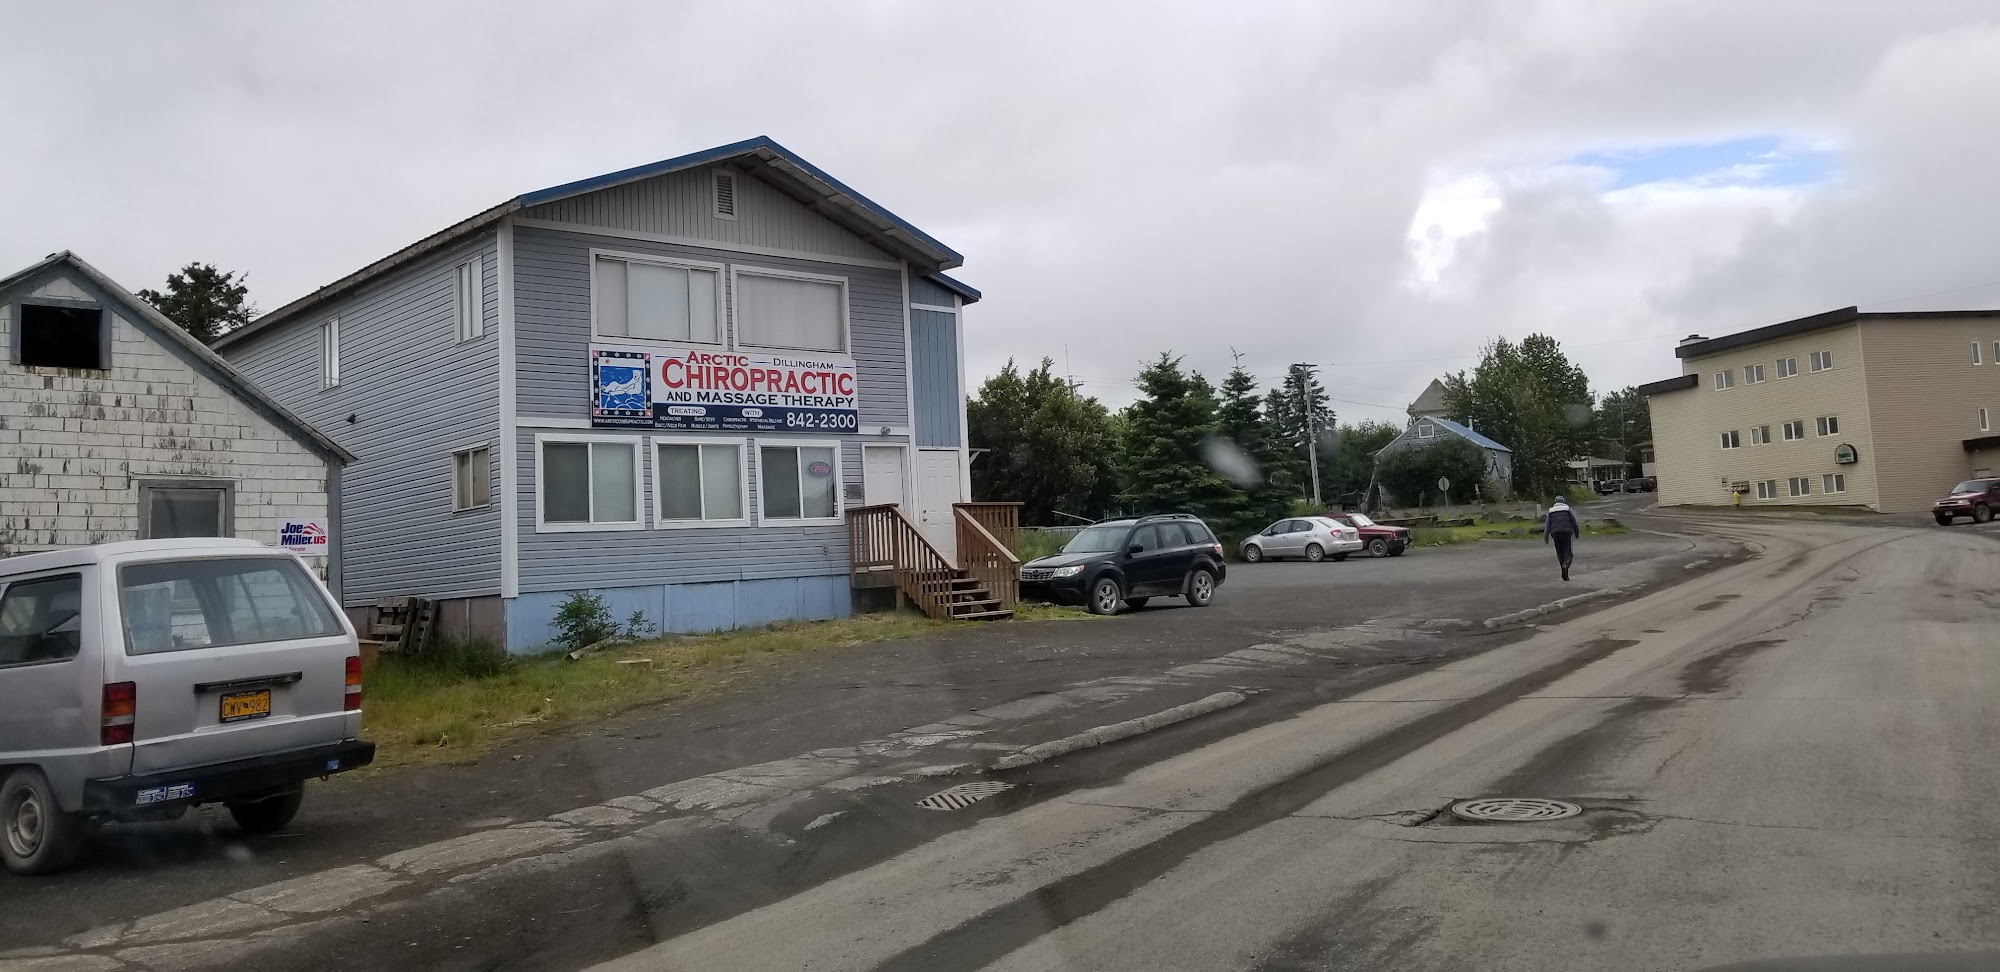 Arctic Chiropractic 222 Main St E, Dillingham Alaska 99576